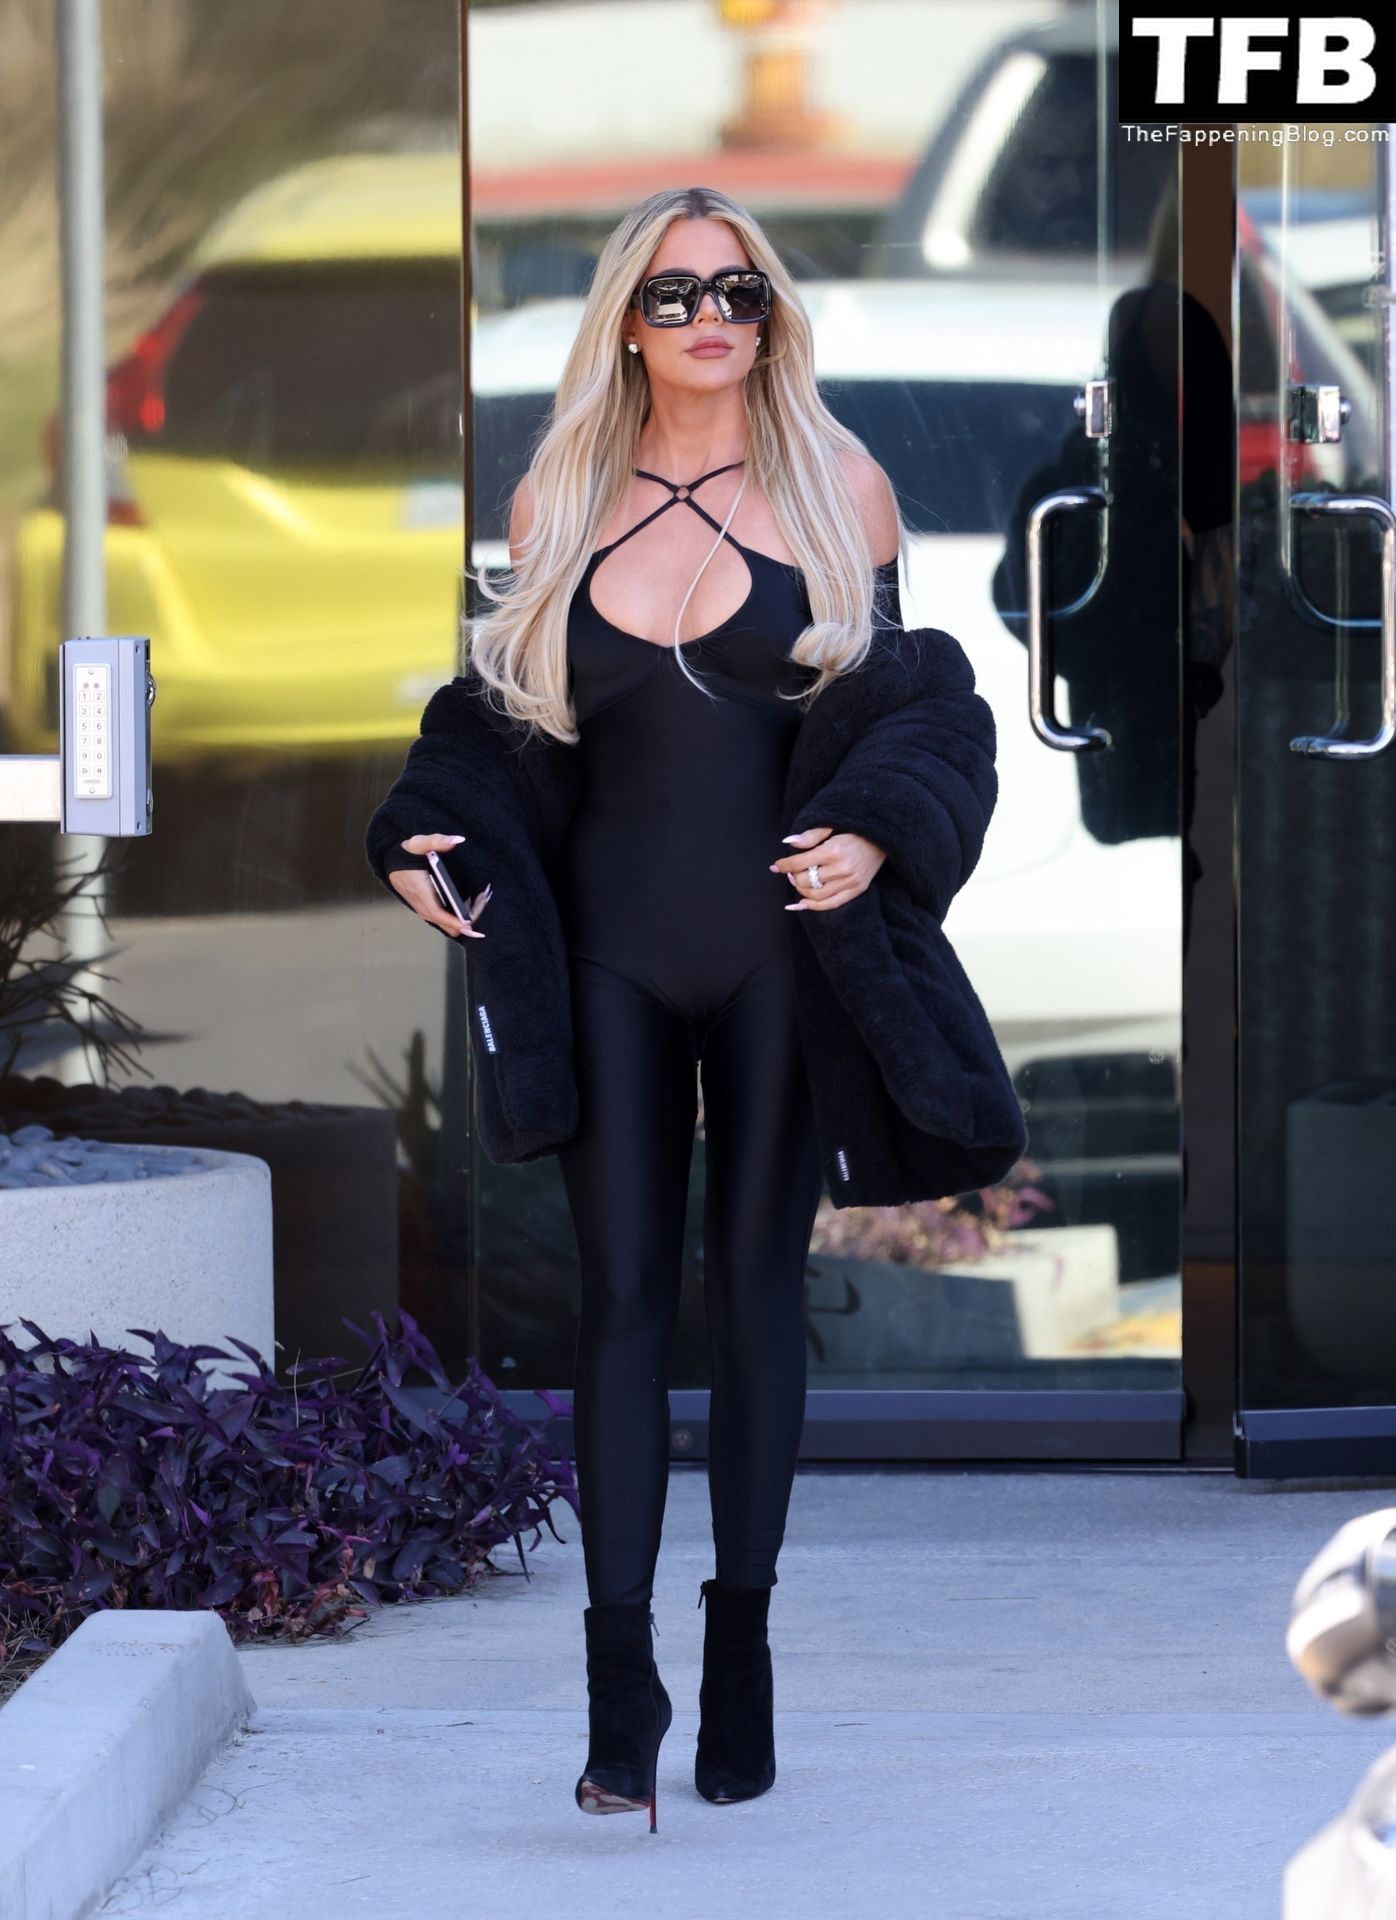 Khloe-Kardashian-Sexy-The-Fappening-Blog-17.jpg